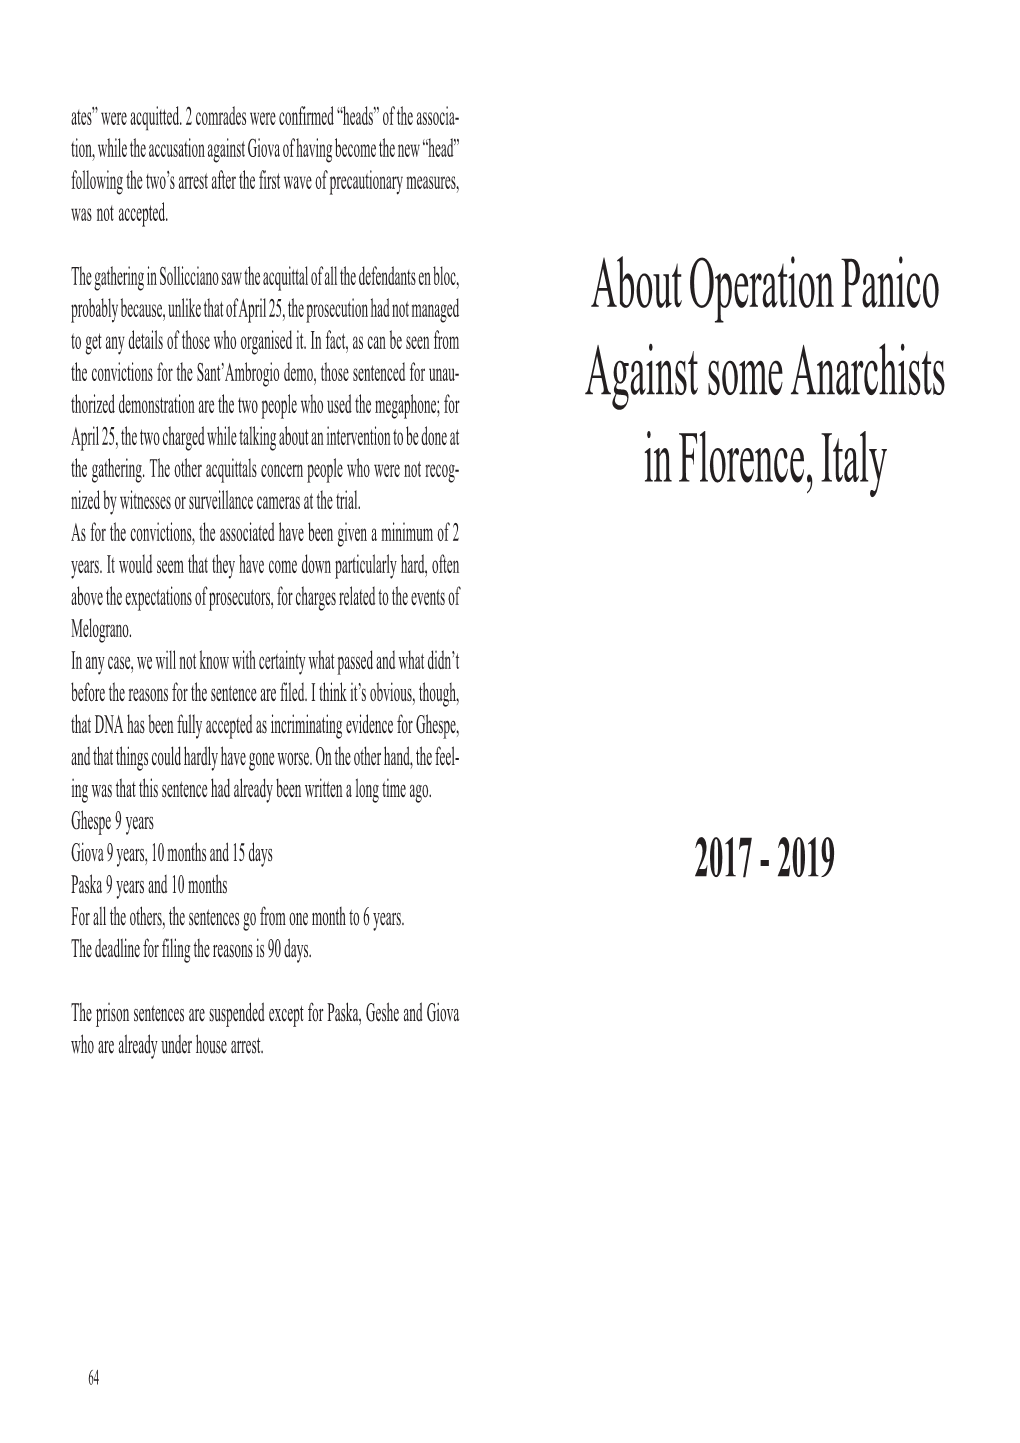 OPERATION PANICO BOOK 05.10.Pmd